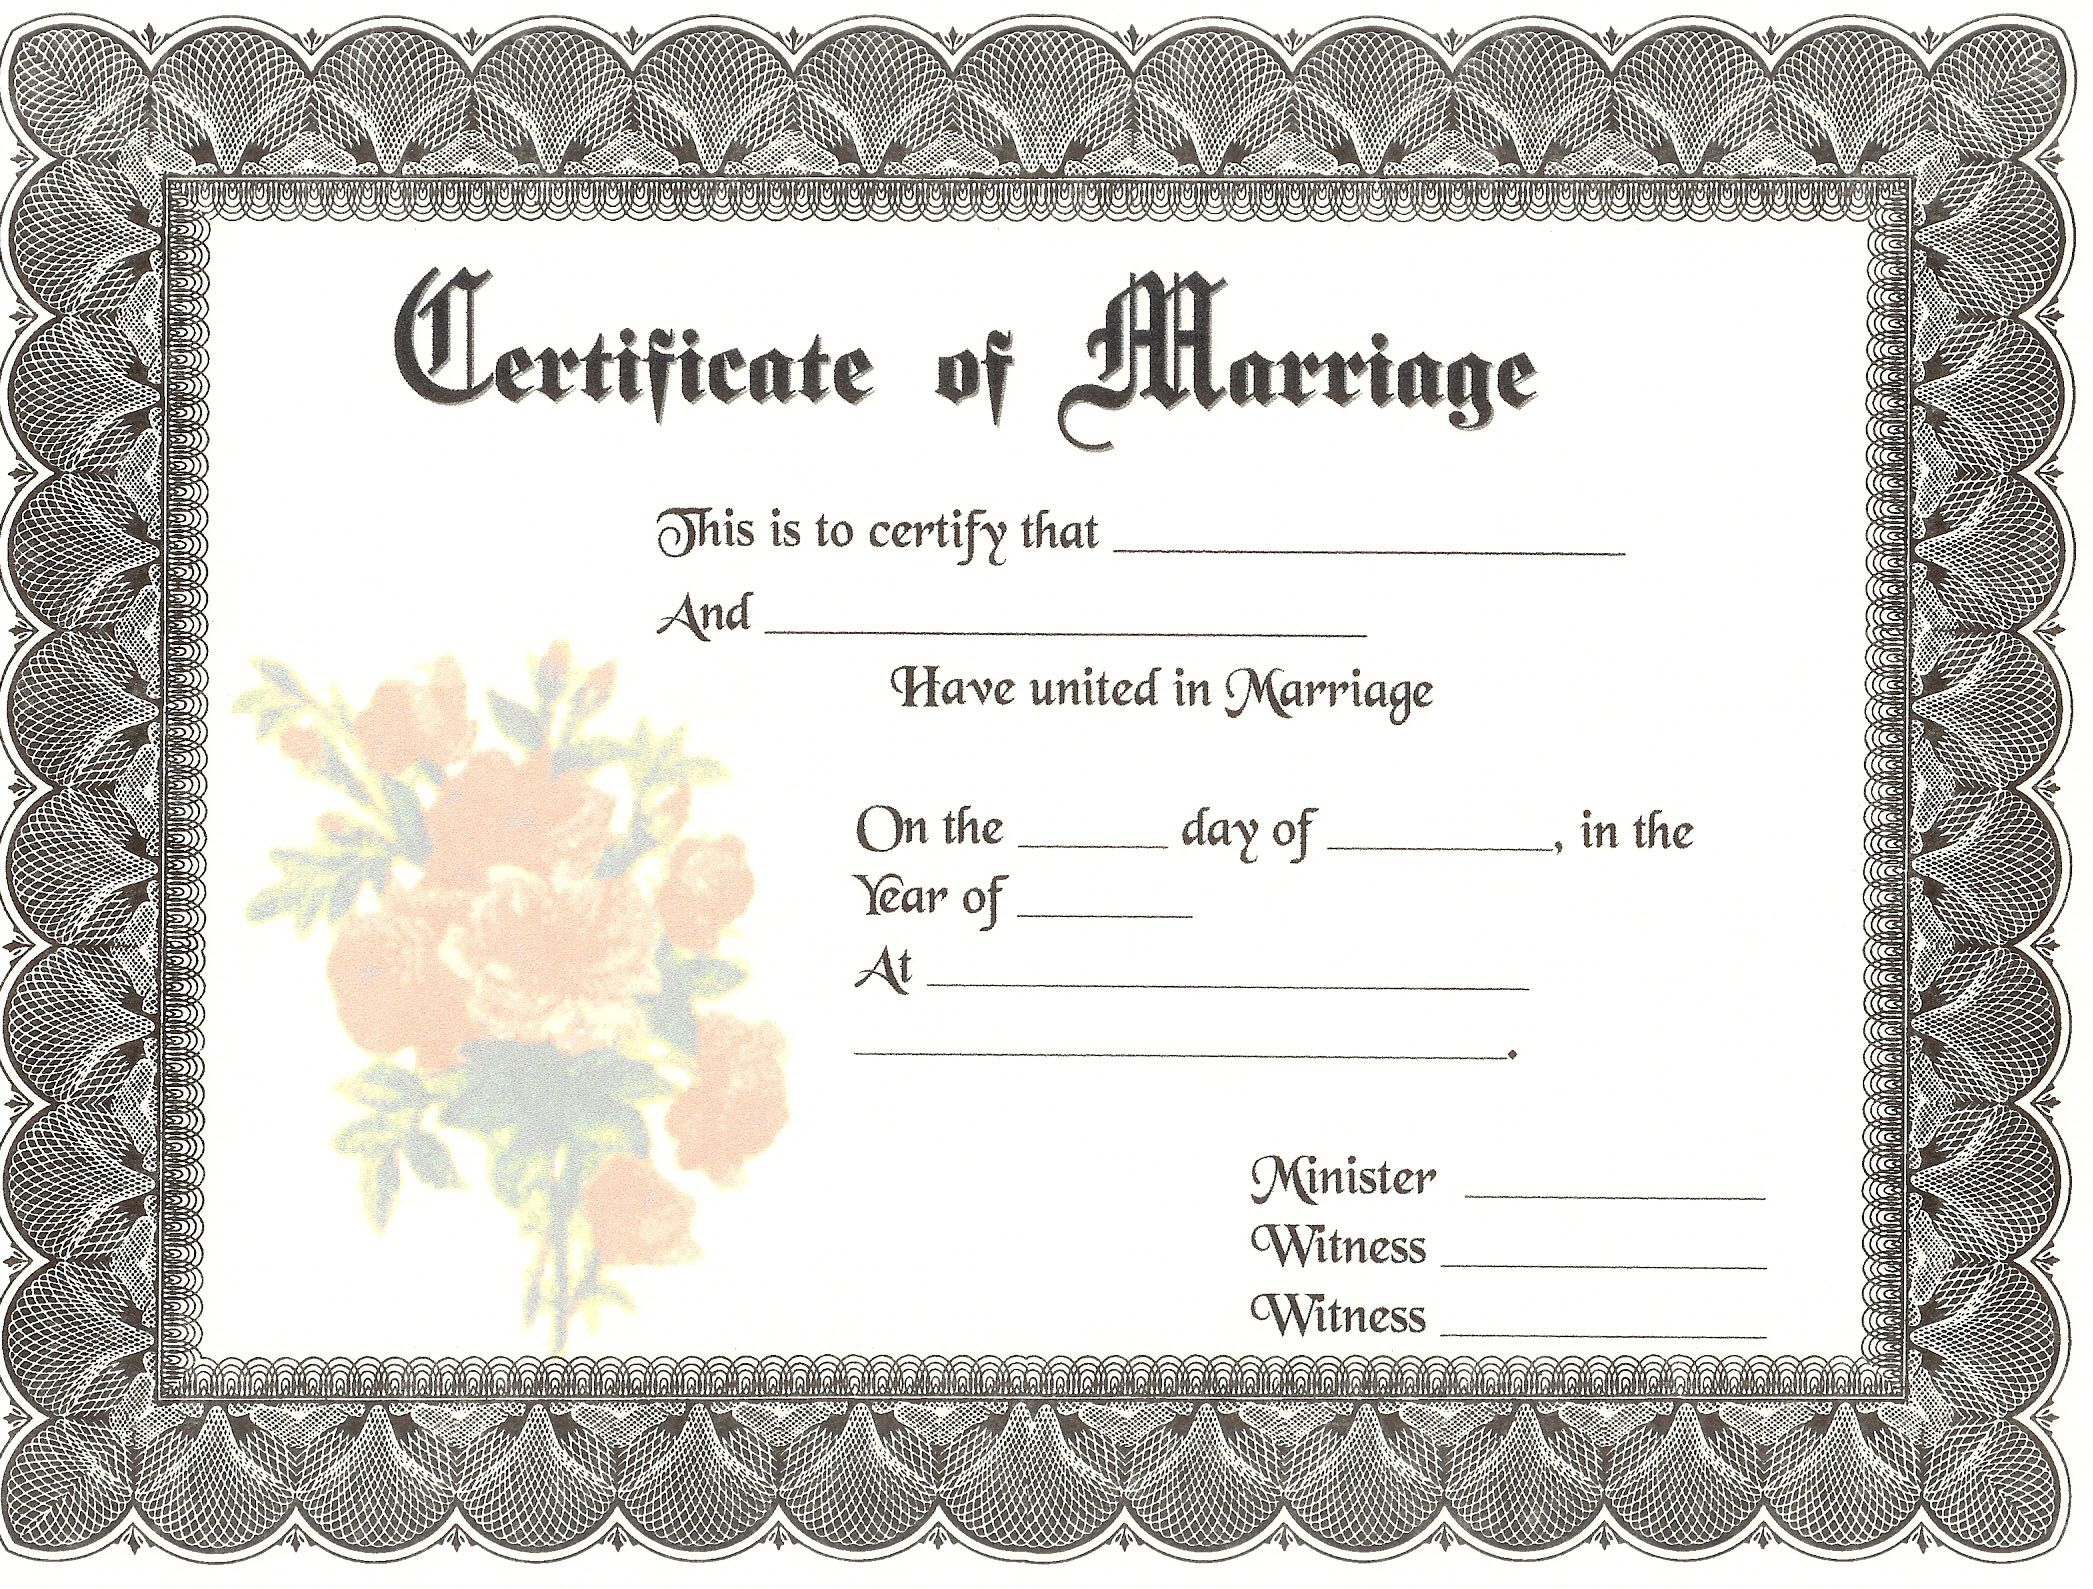 marriage certificate Blank Template - Imgflip Within Certificate Of Marriage Template